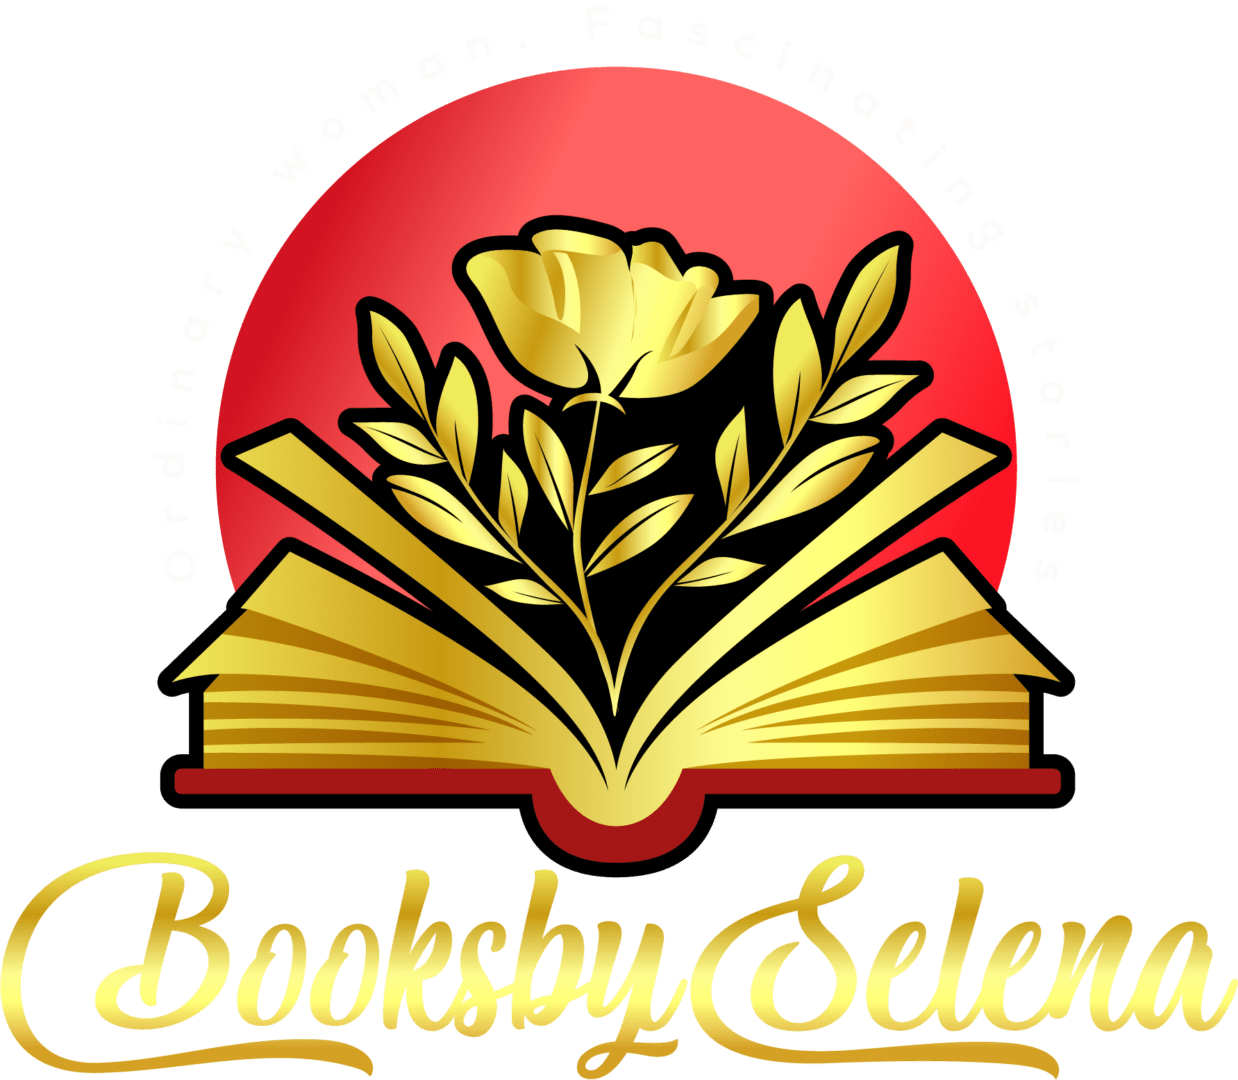 A logo for booksbyselene, an online bookstore.